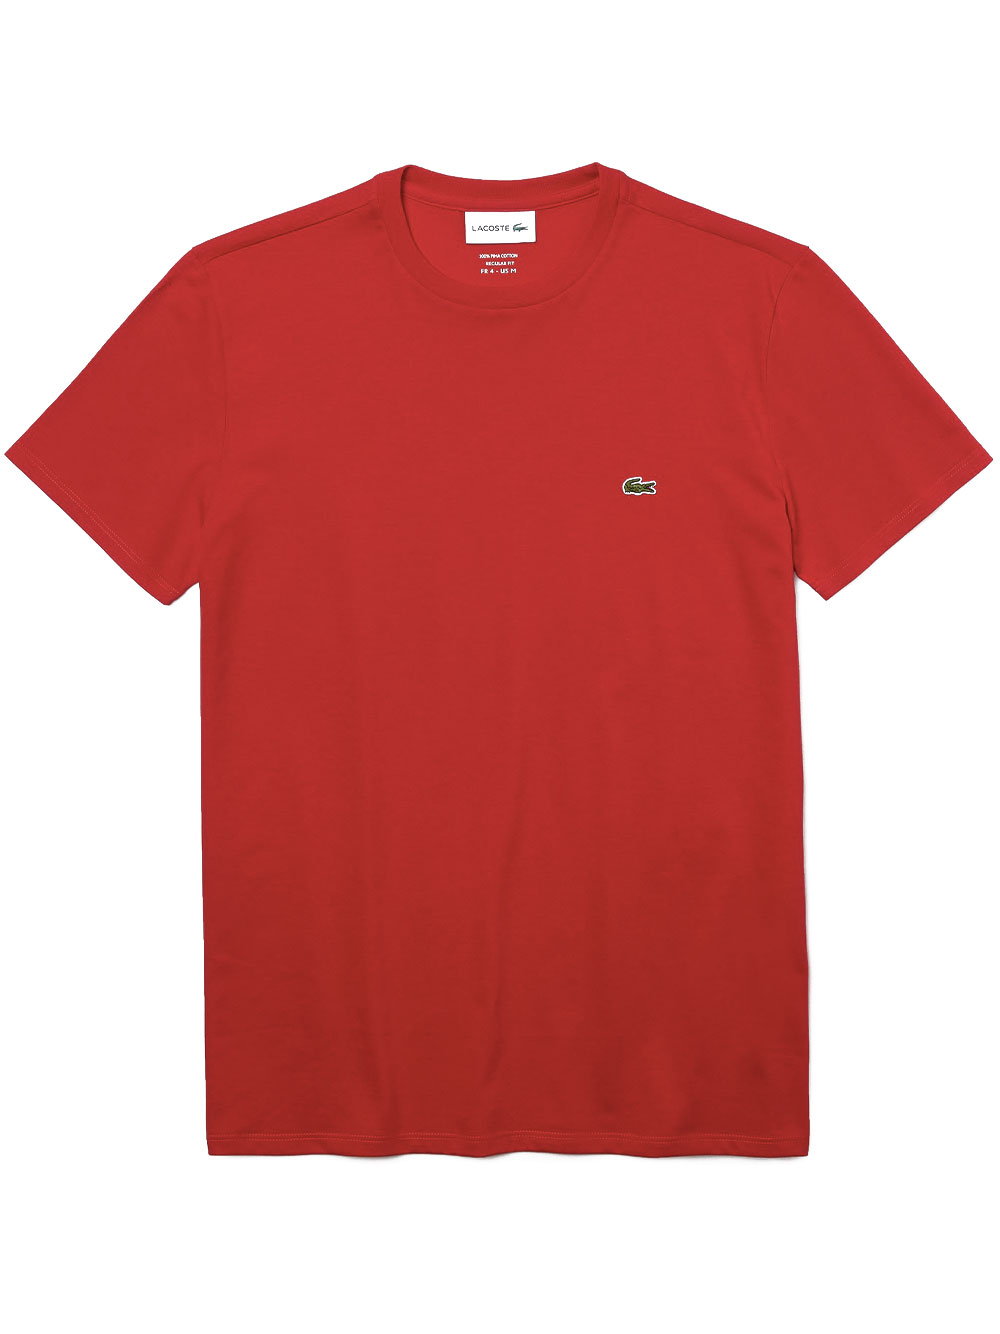 Round-neck plain pima cotton jersey T-shirt